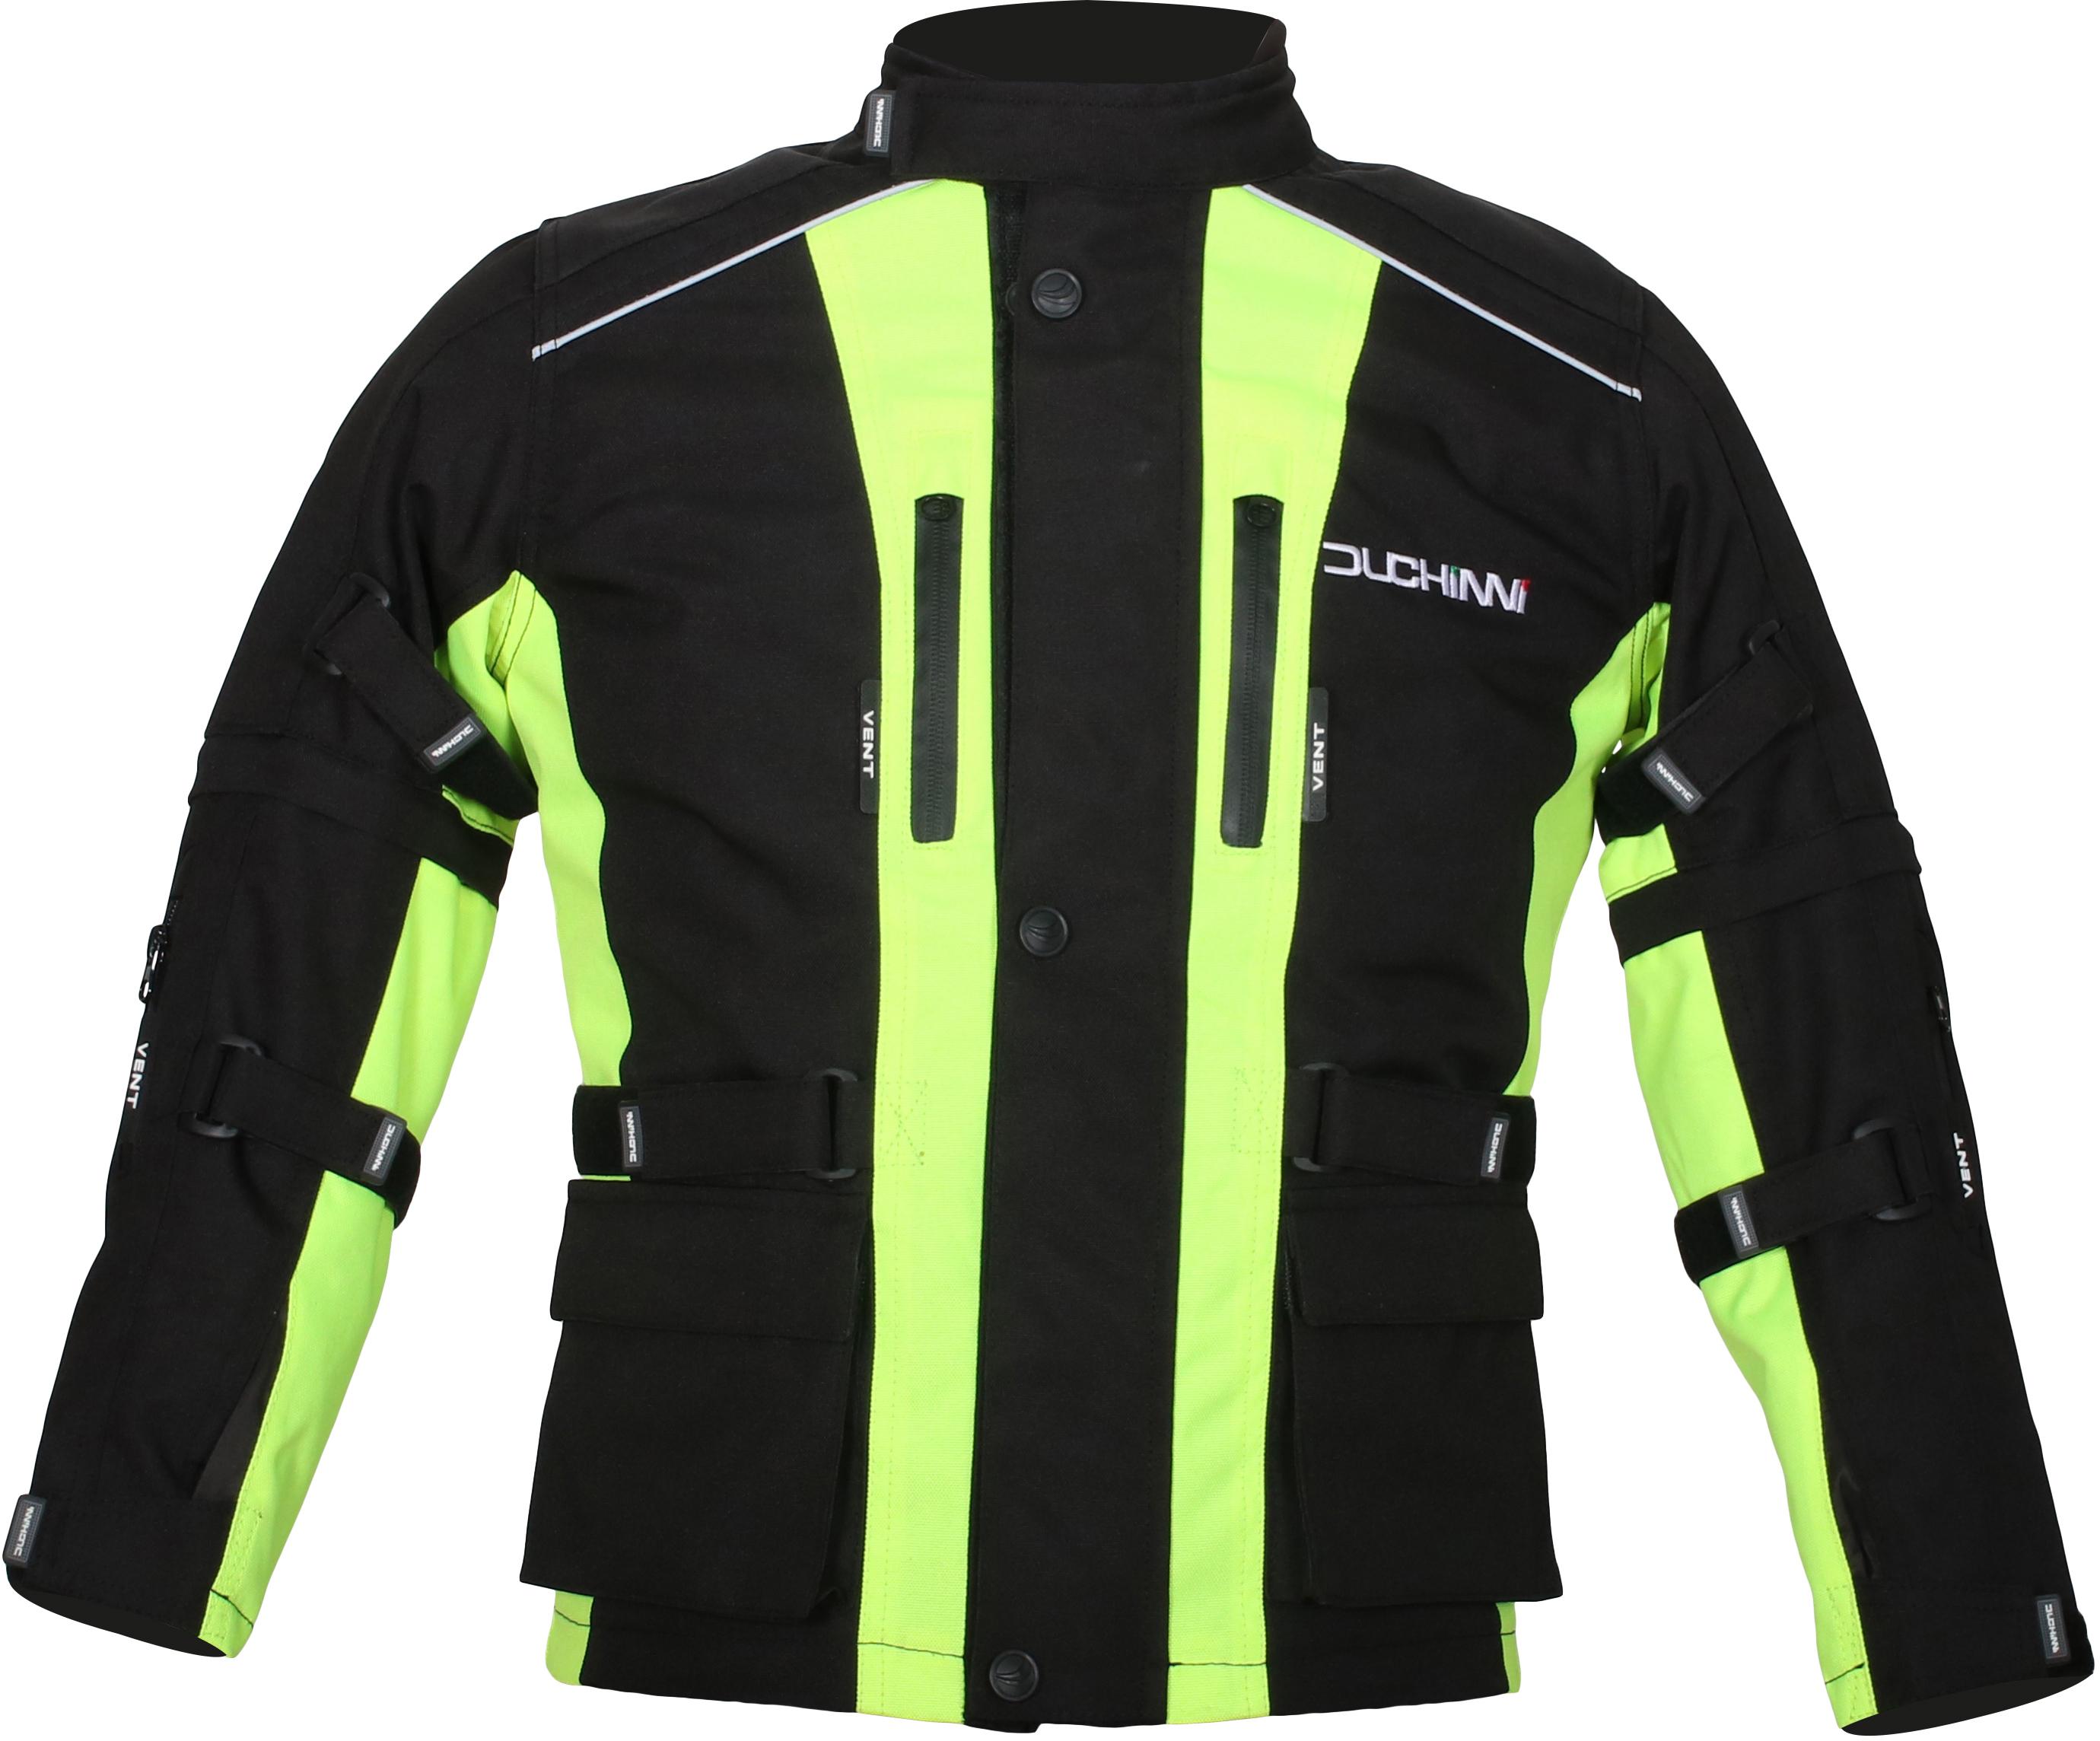 Duchinni Jago Youth Motorcycle Jacket - Black And Neon, Xs